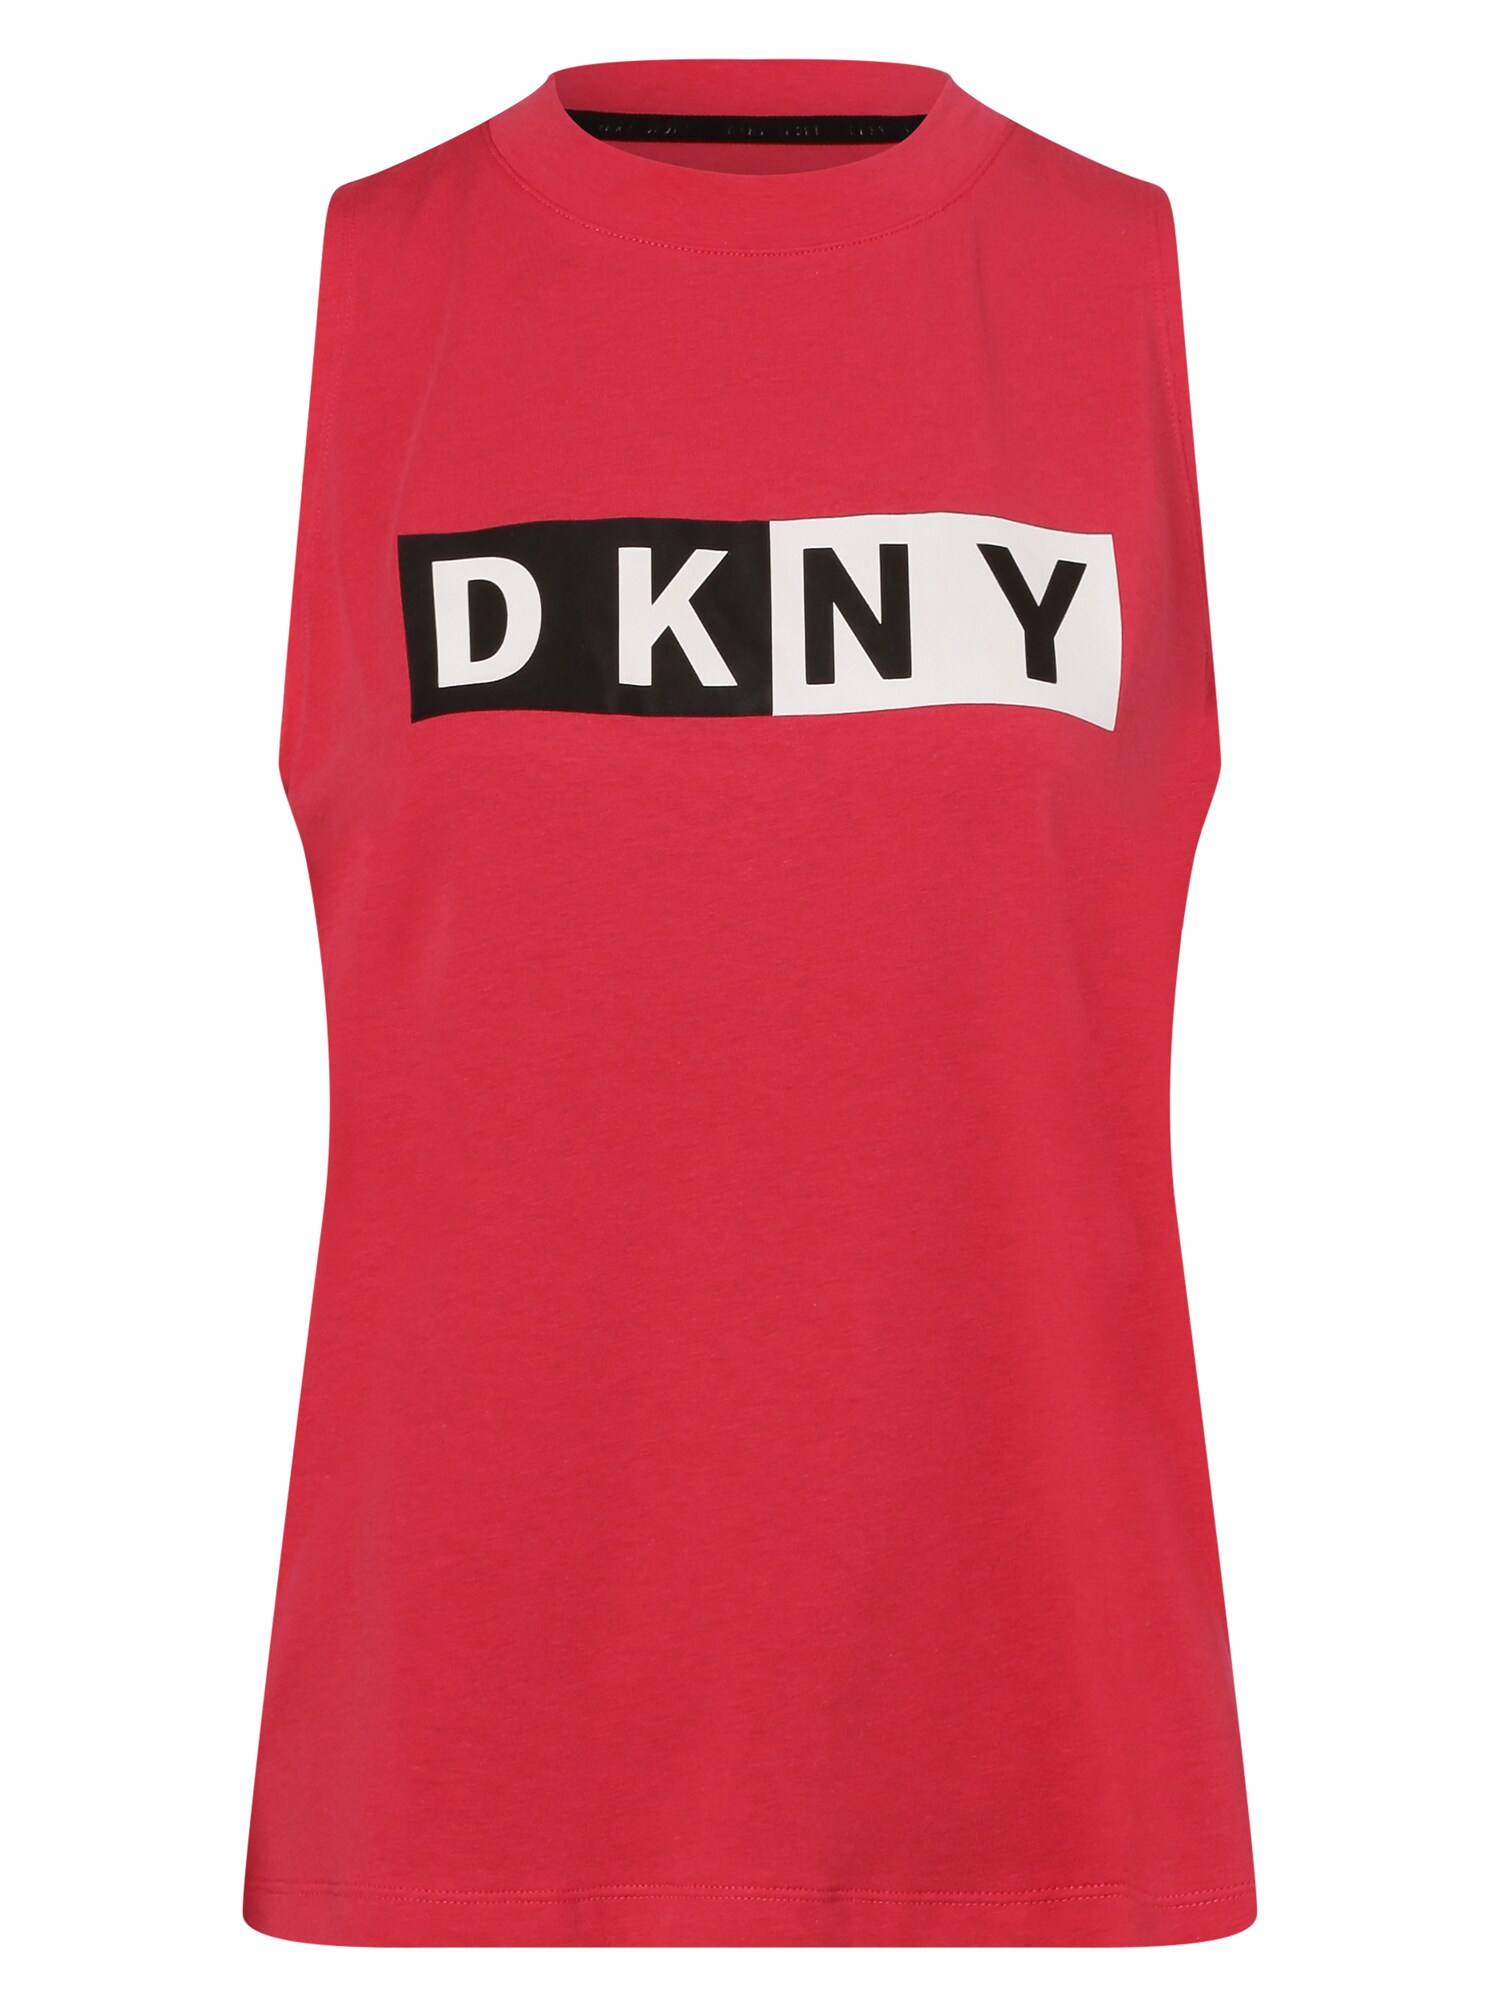 DKNY Top rot / wei / schwarz